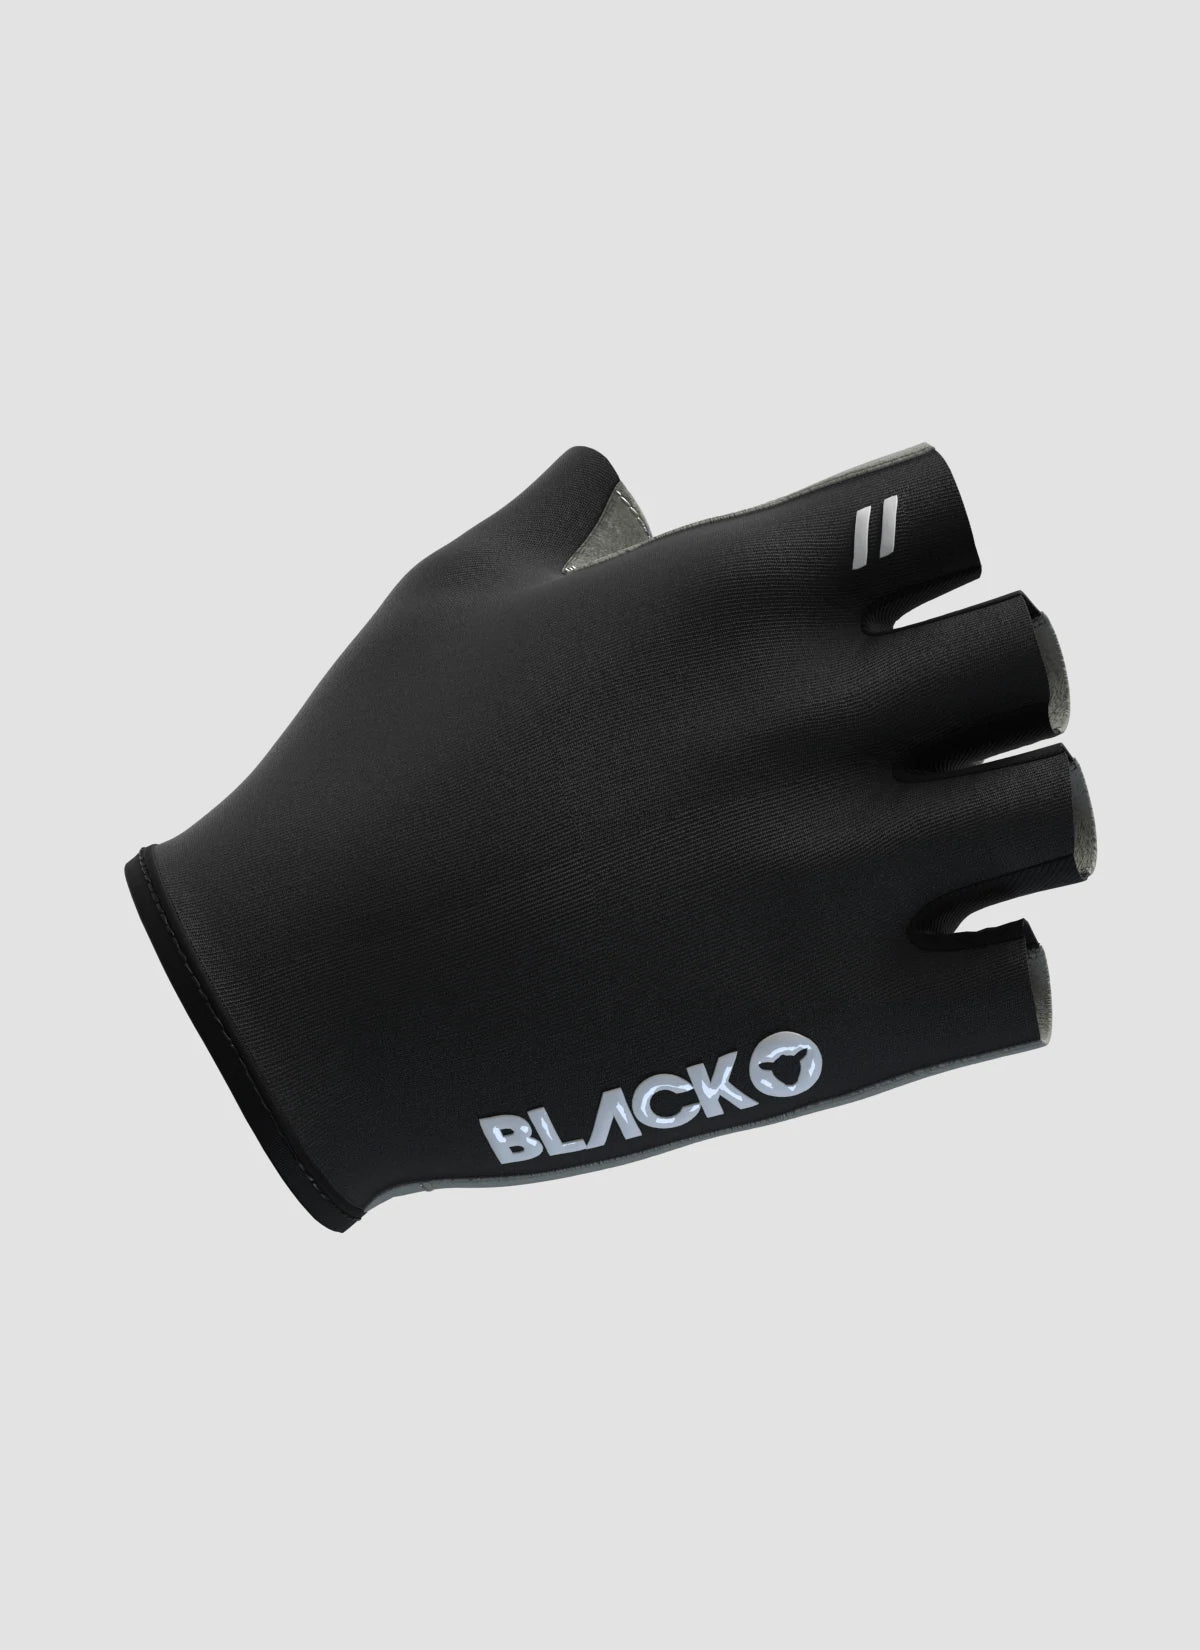 Black Sheep Cycling Essentials Team Cycling Glove / Black